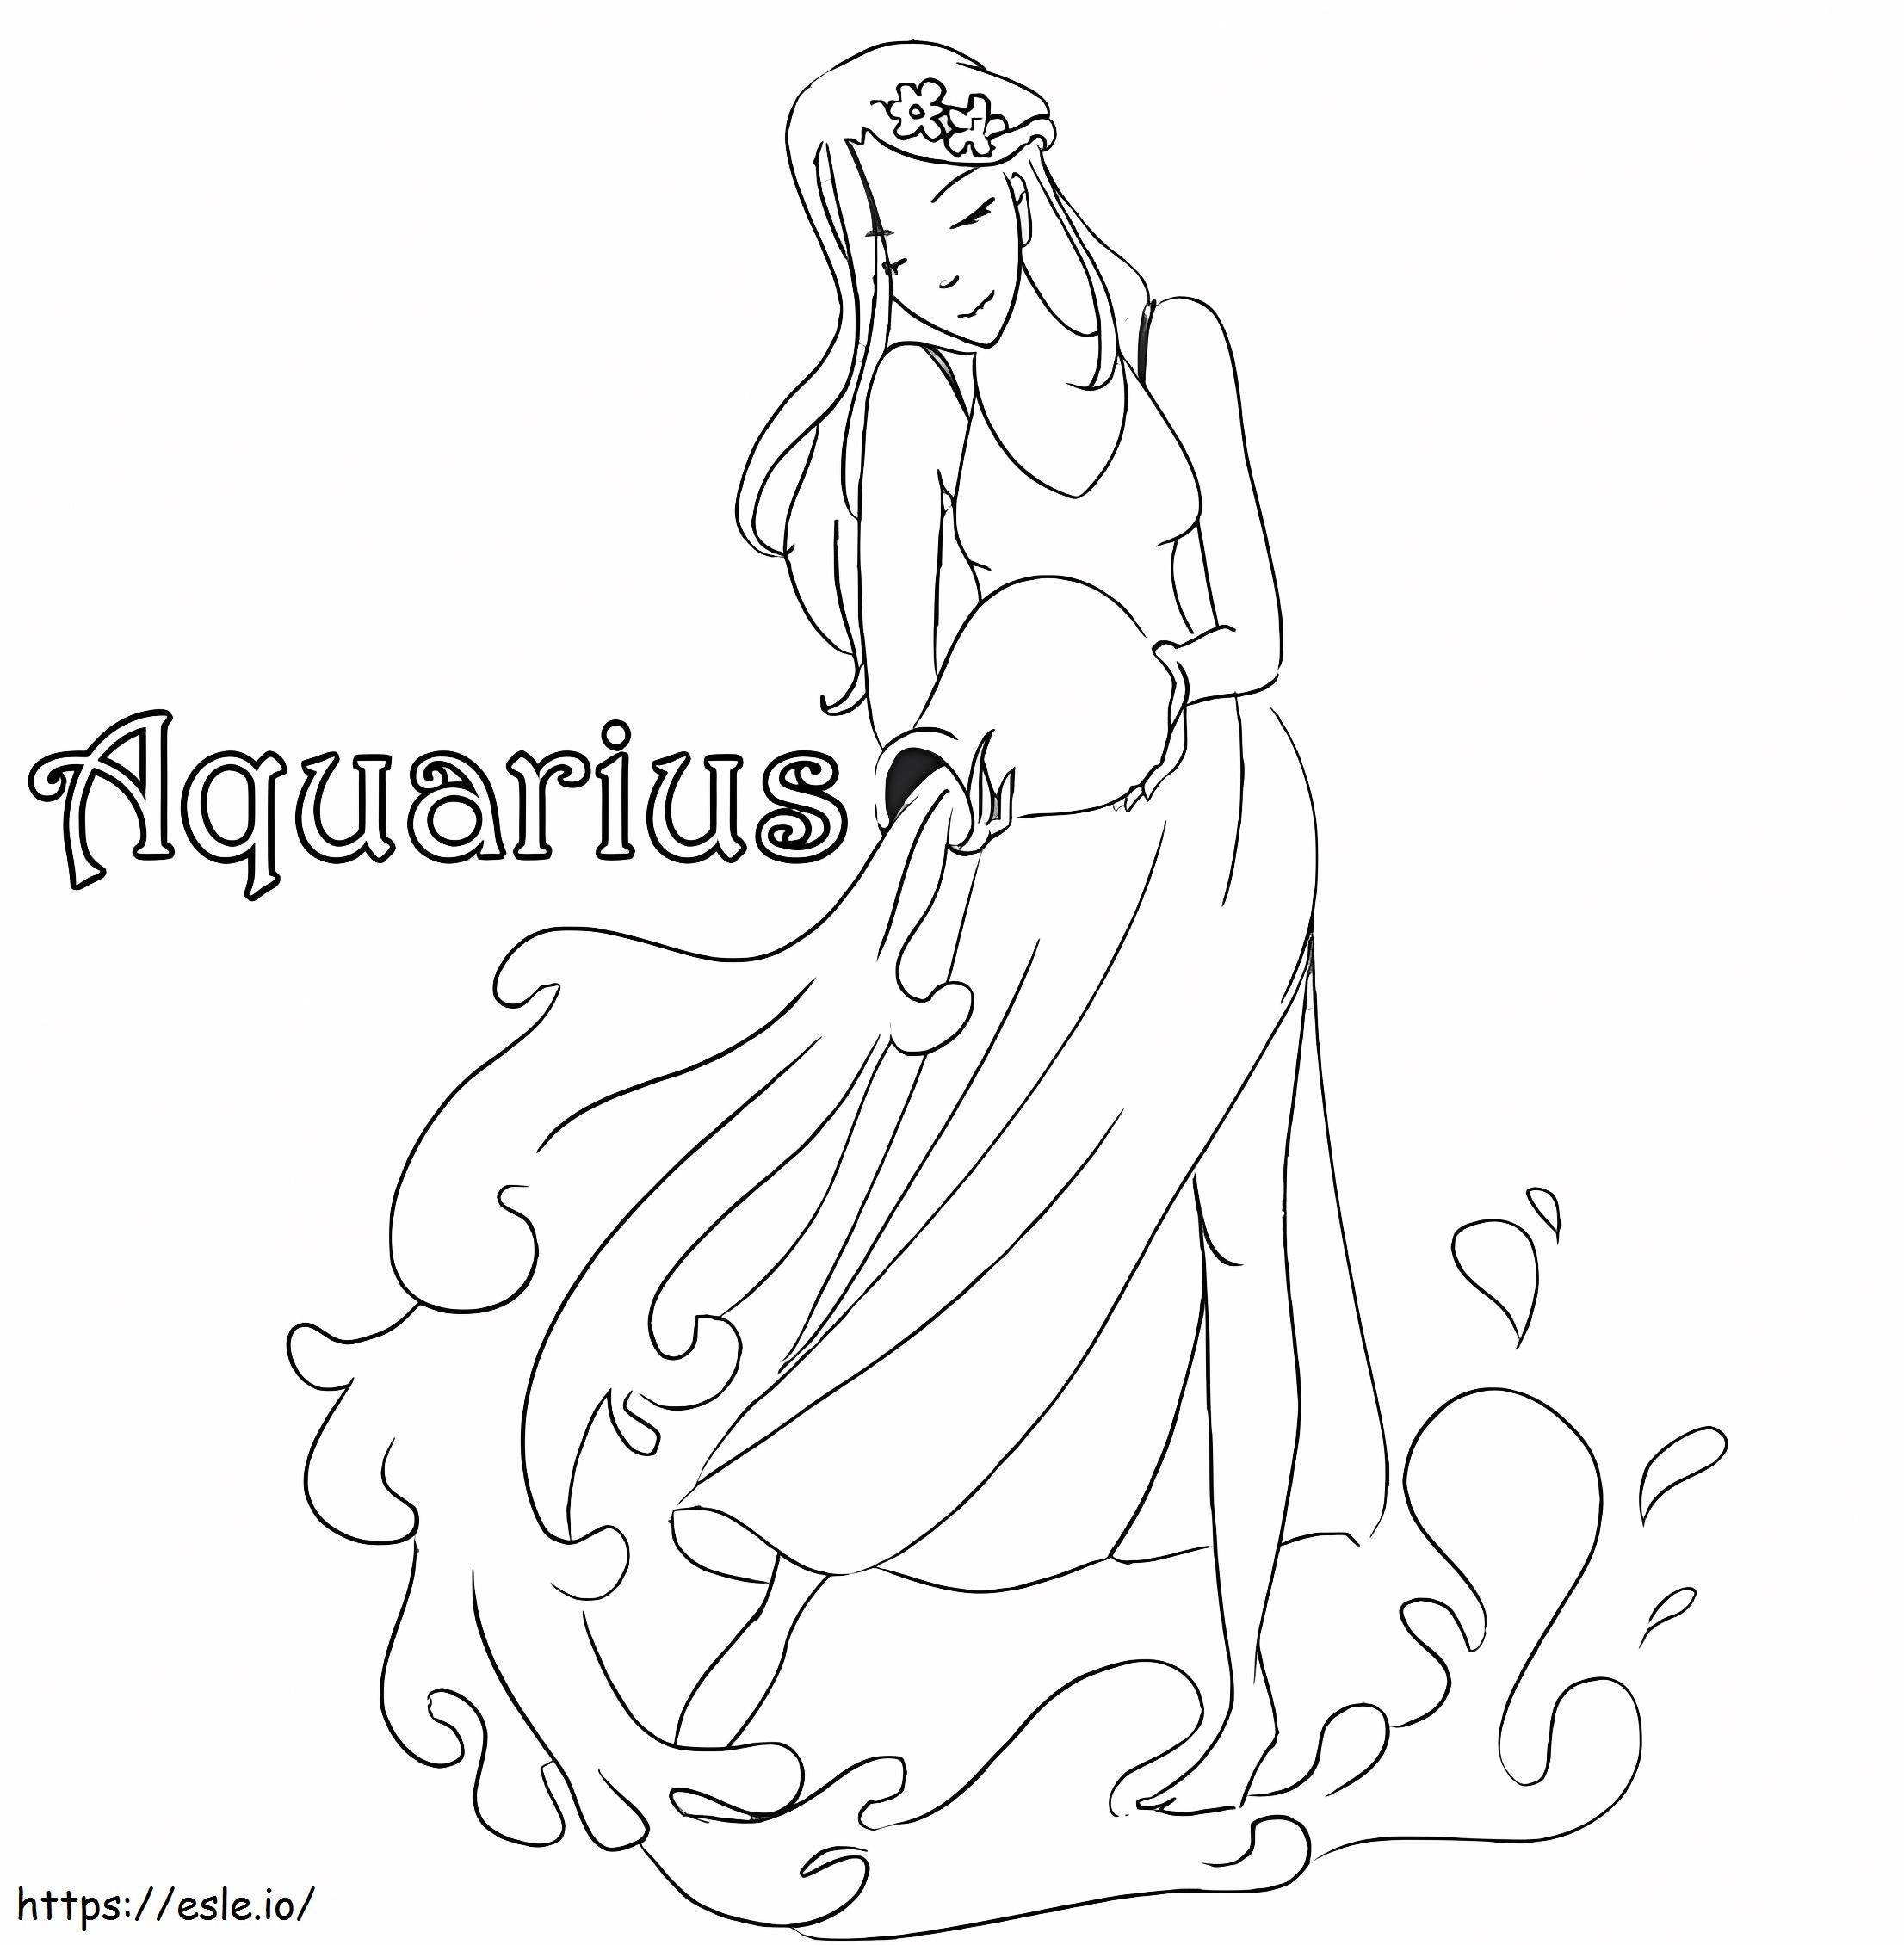 Aquarius 12 coloring page